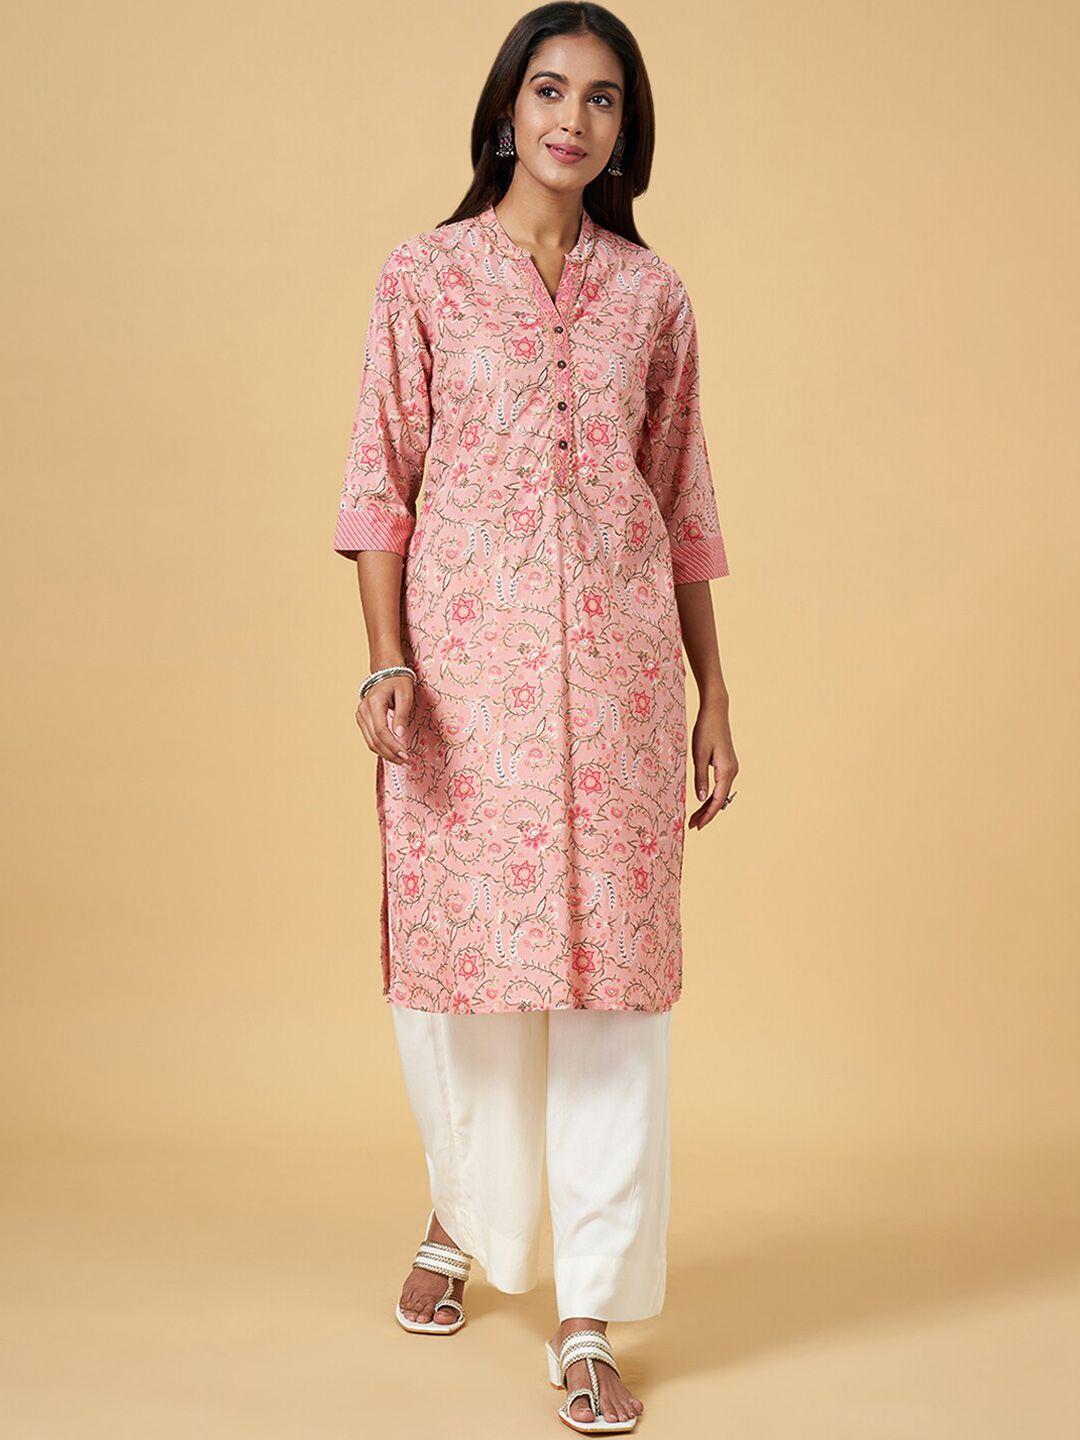 rangmanch by pantaloons floral printed cotton kurta